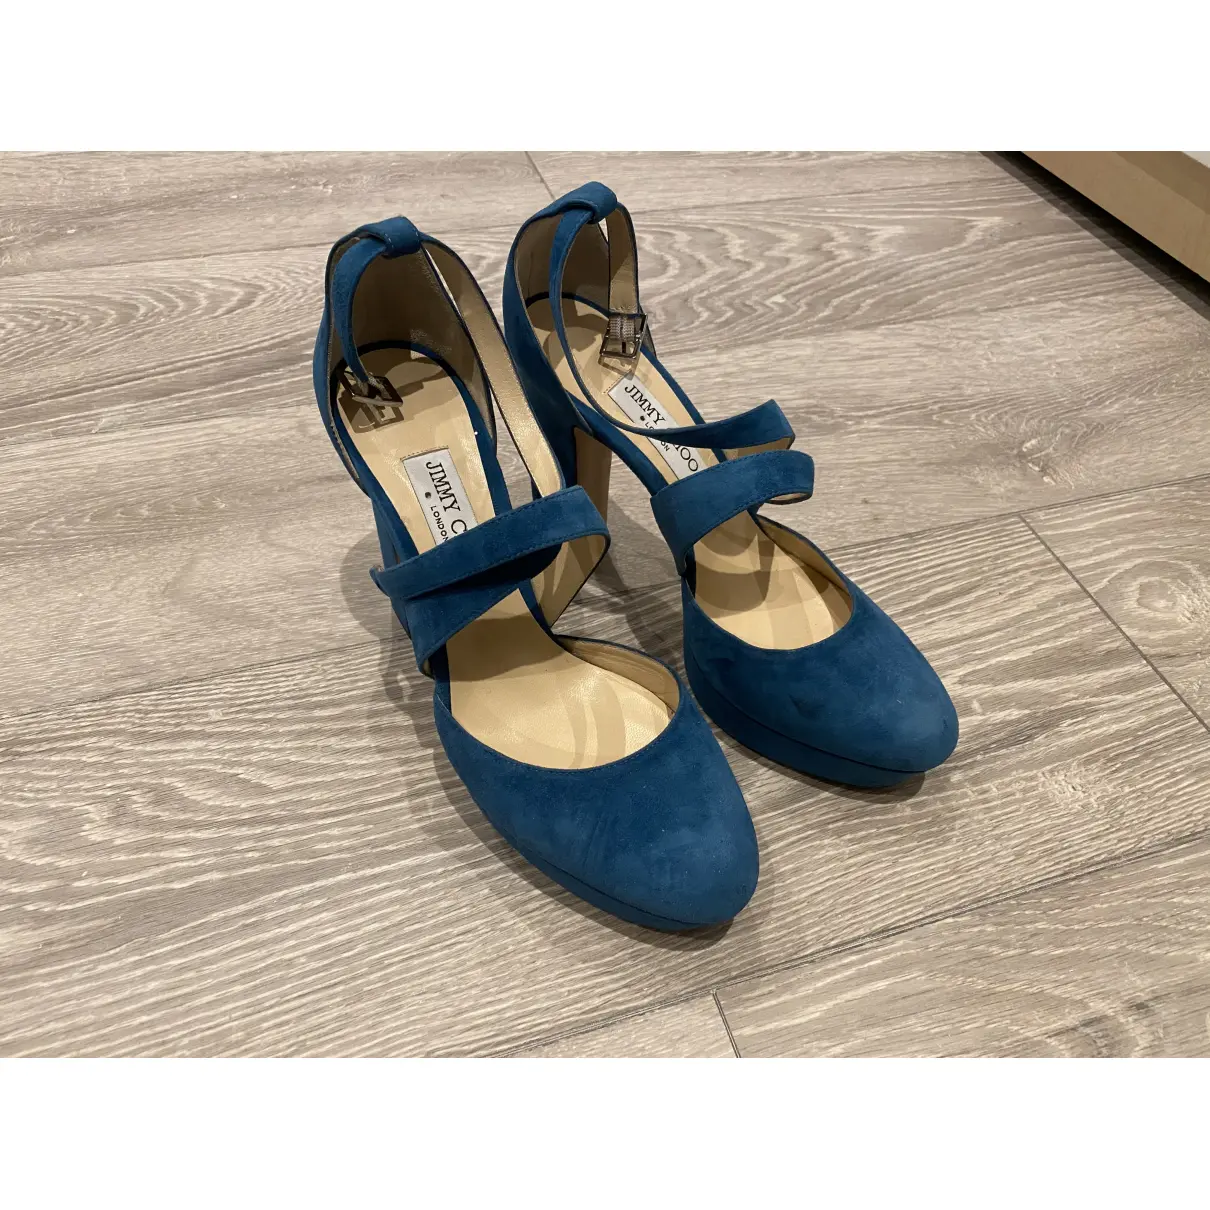 Buy Jimmy Choo Velvet heels online